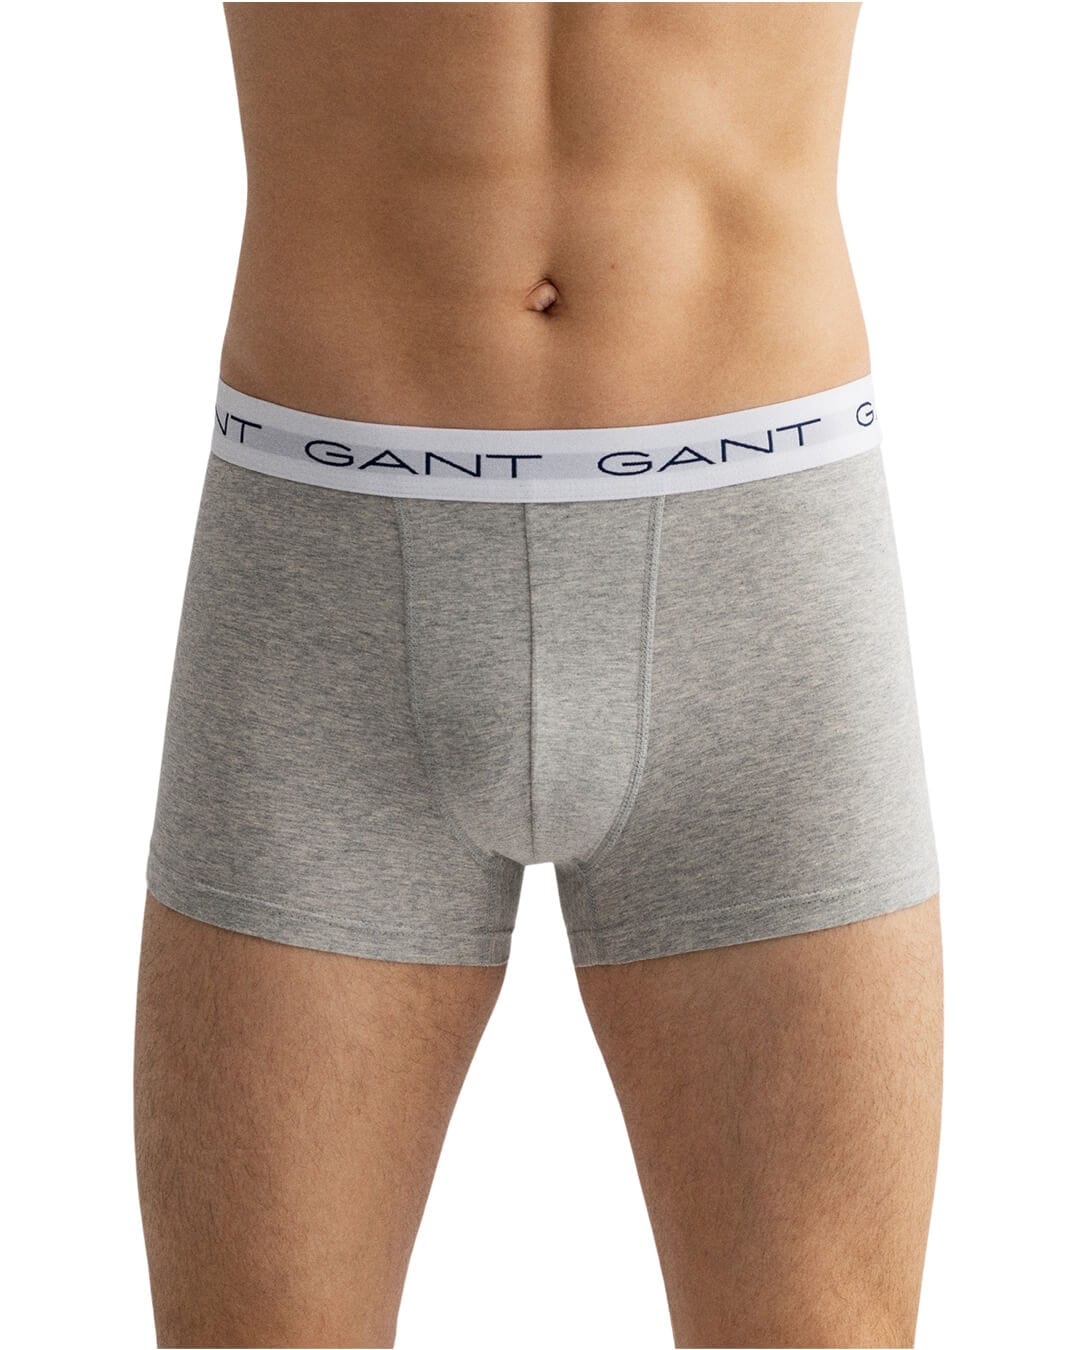 Gant Underwear Gant Grey, Black And White Three-Pack Trunks